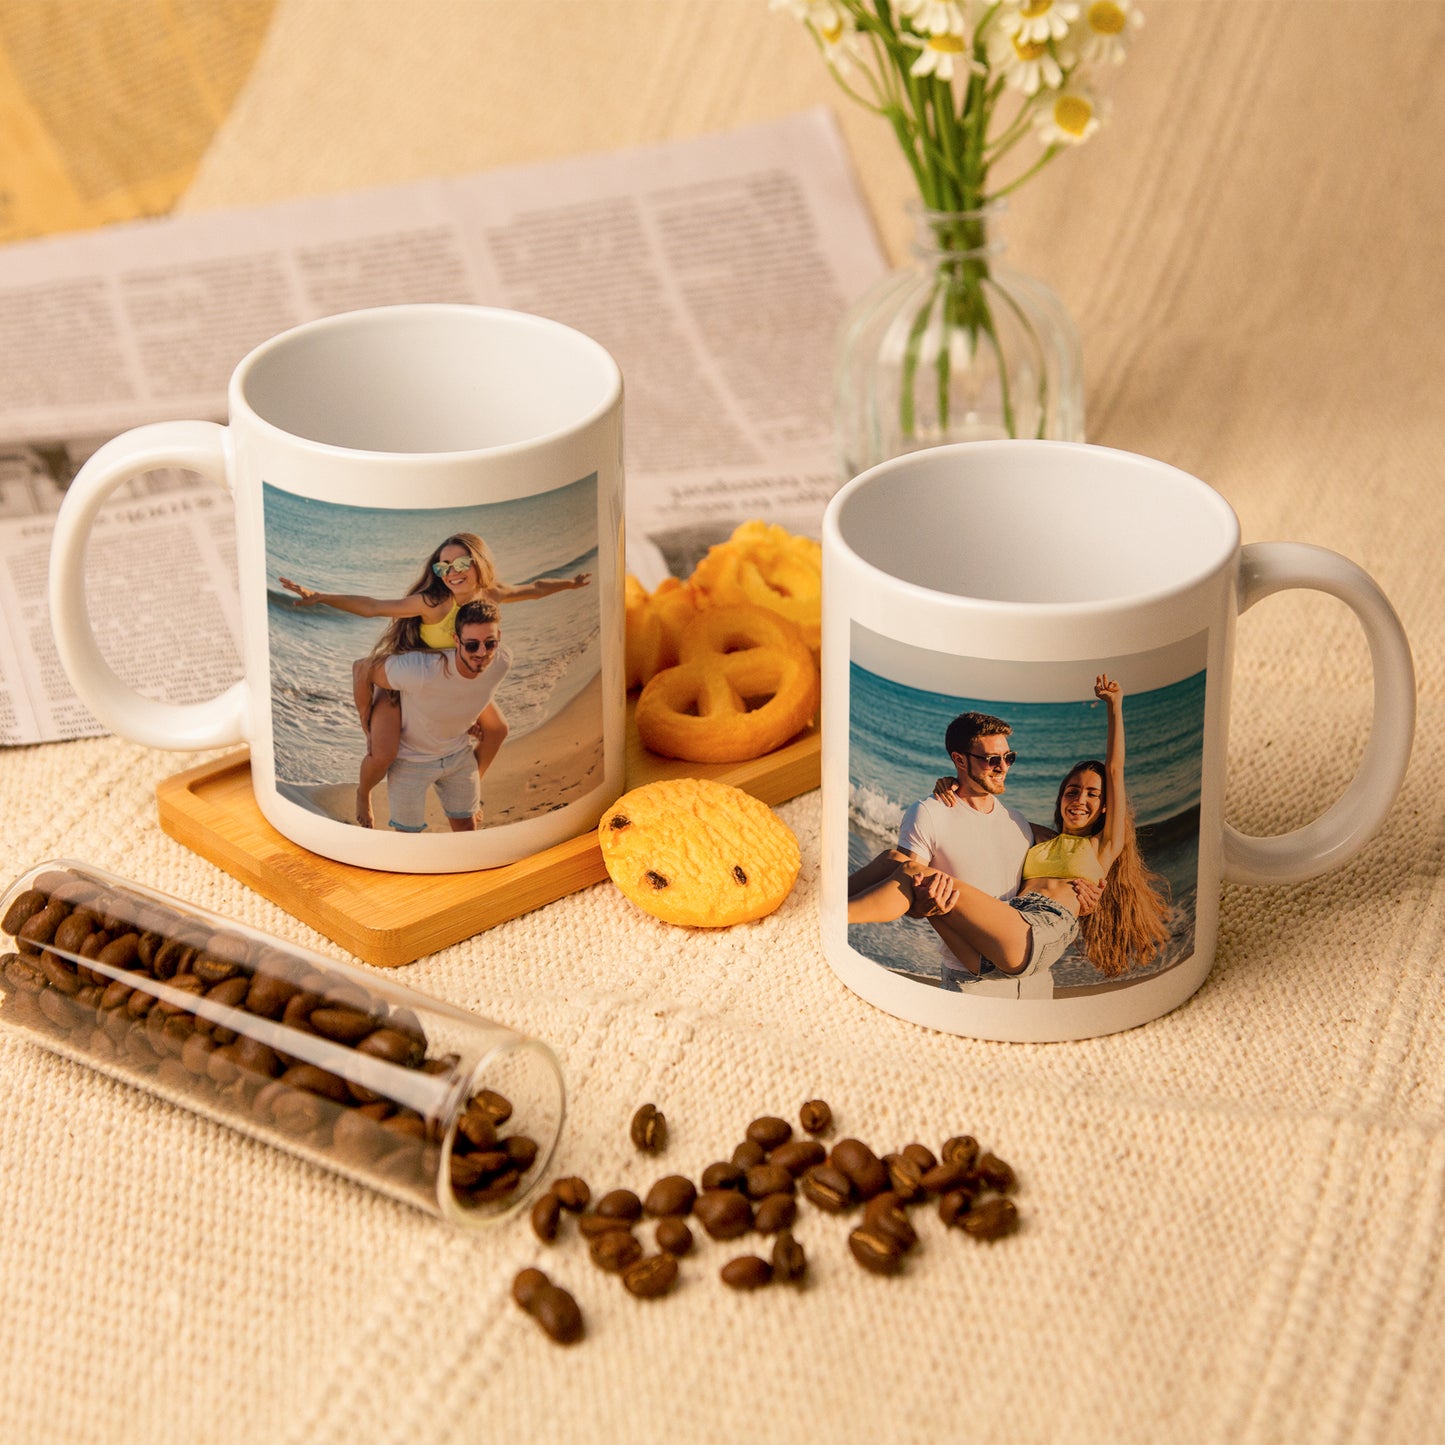 Customizedbee Couple Mug Set of 2  - Ceramic Coffee Mug with Custom Photo Name Text